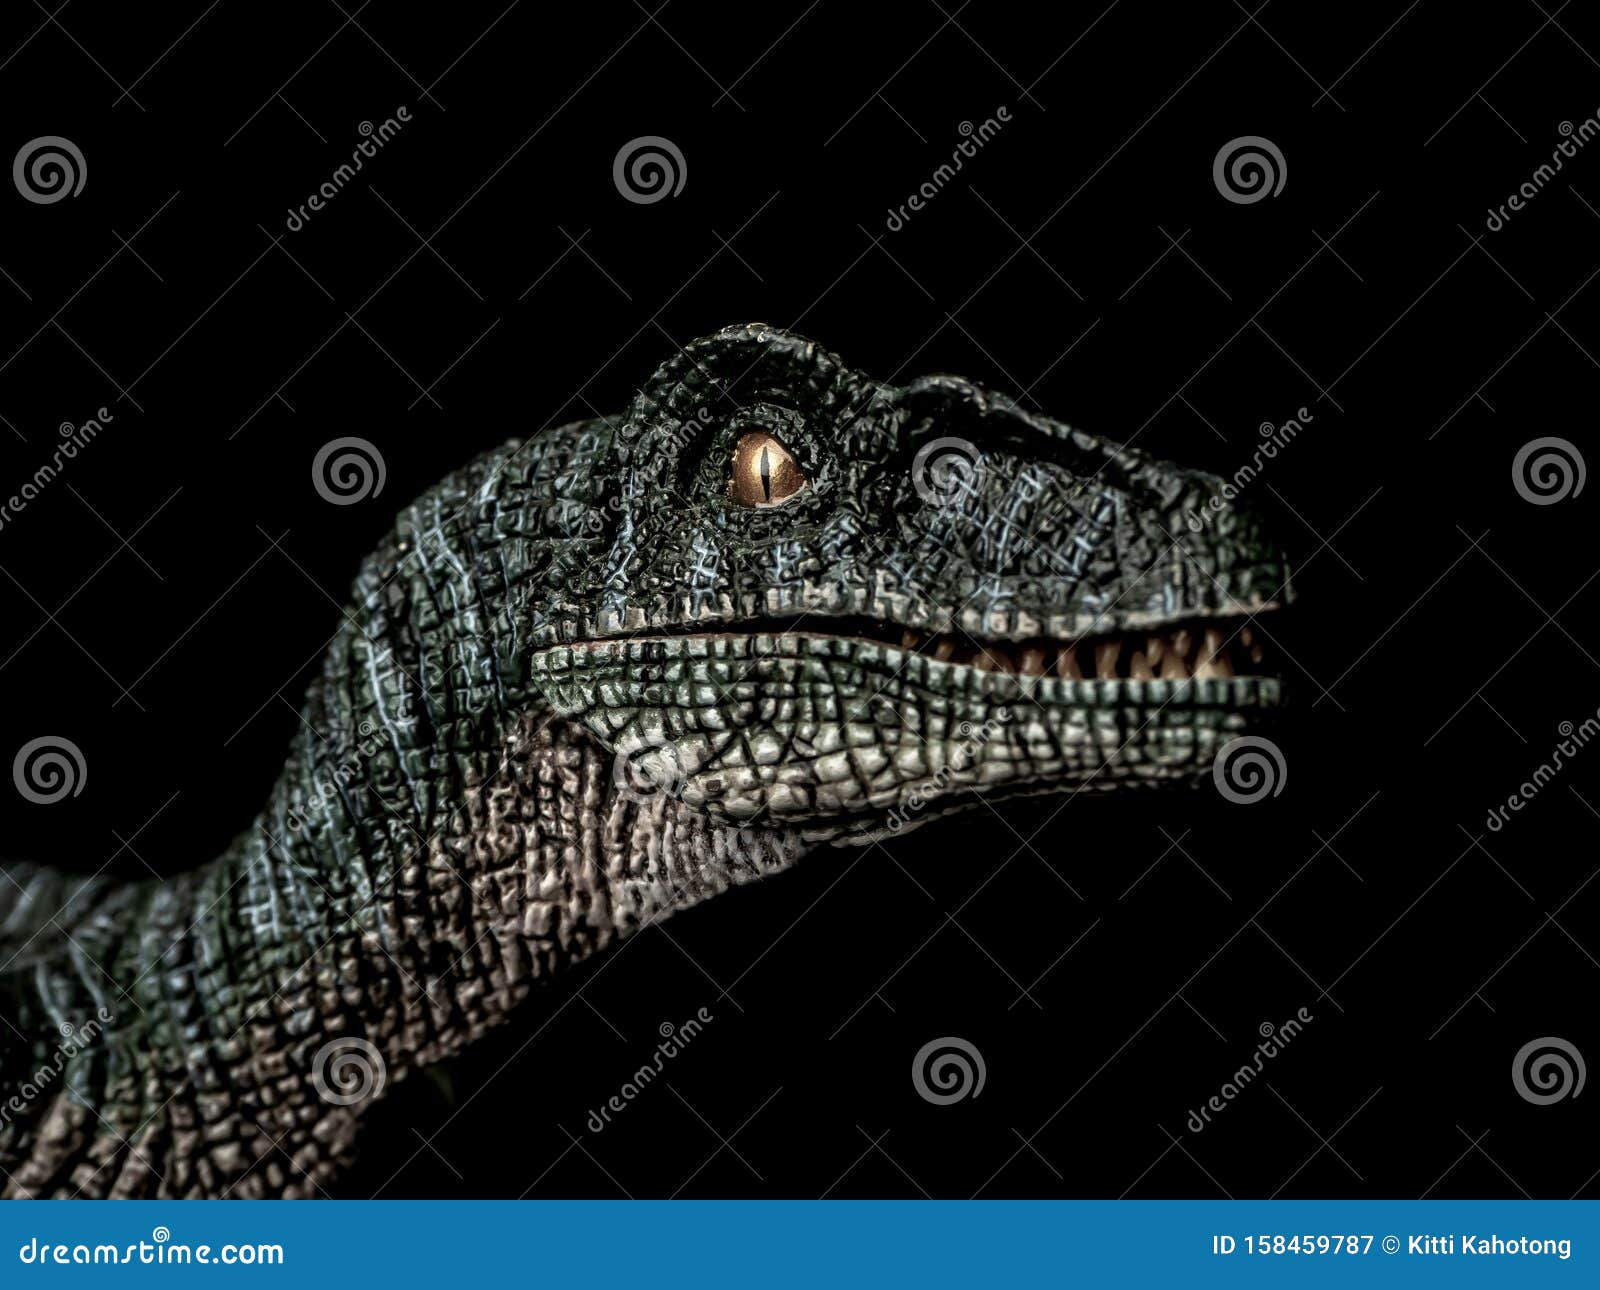 velociraptor dinosaur on black  background